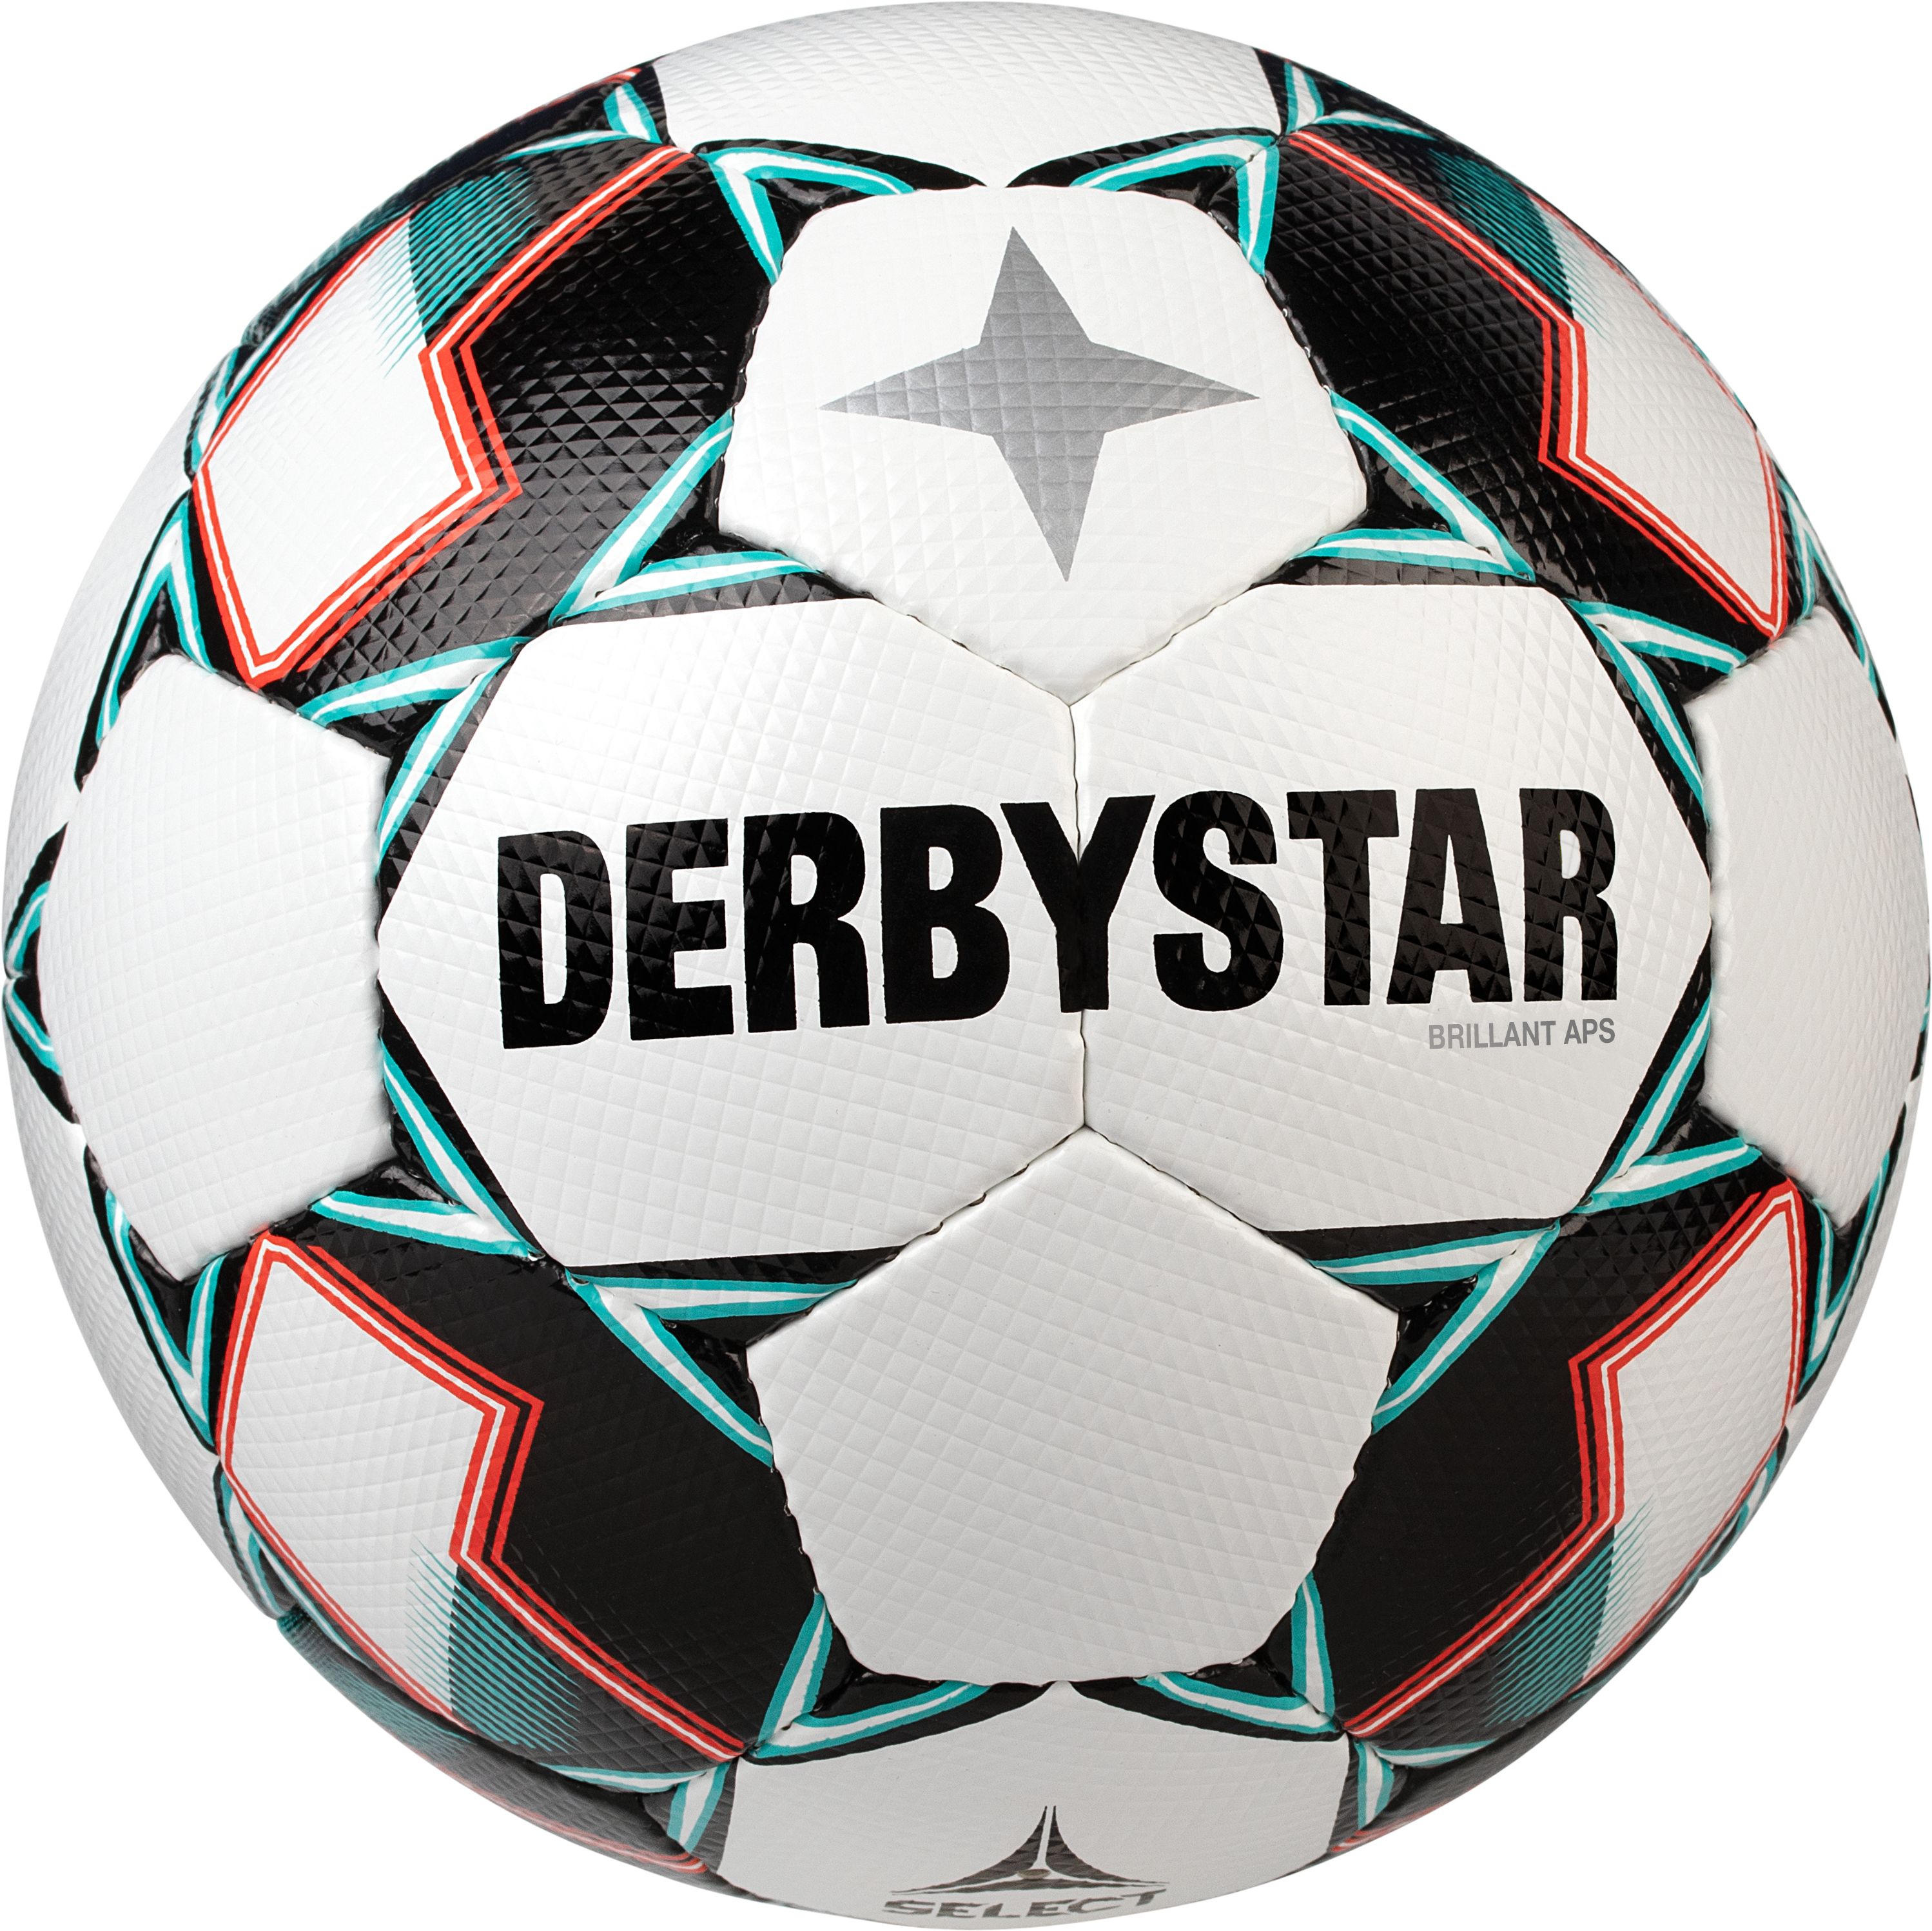 Derbystar  Spiellball Brillant APS Original Saison 2020/21